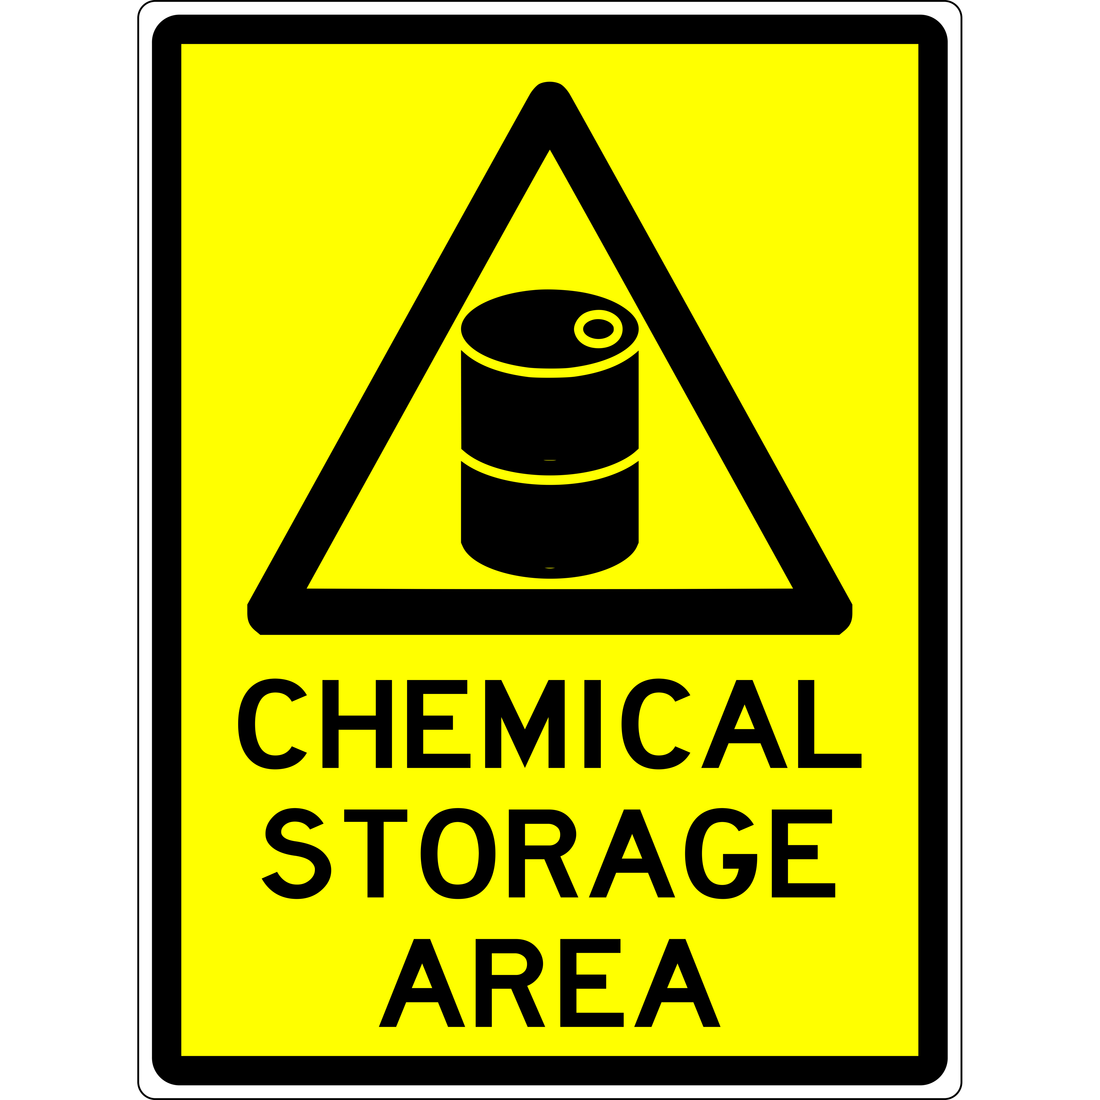 WARNING - CHEMICAL STORAGE AREA